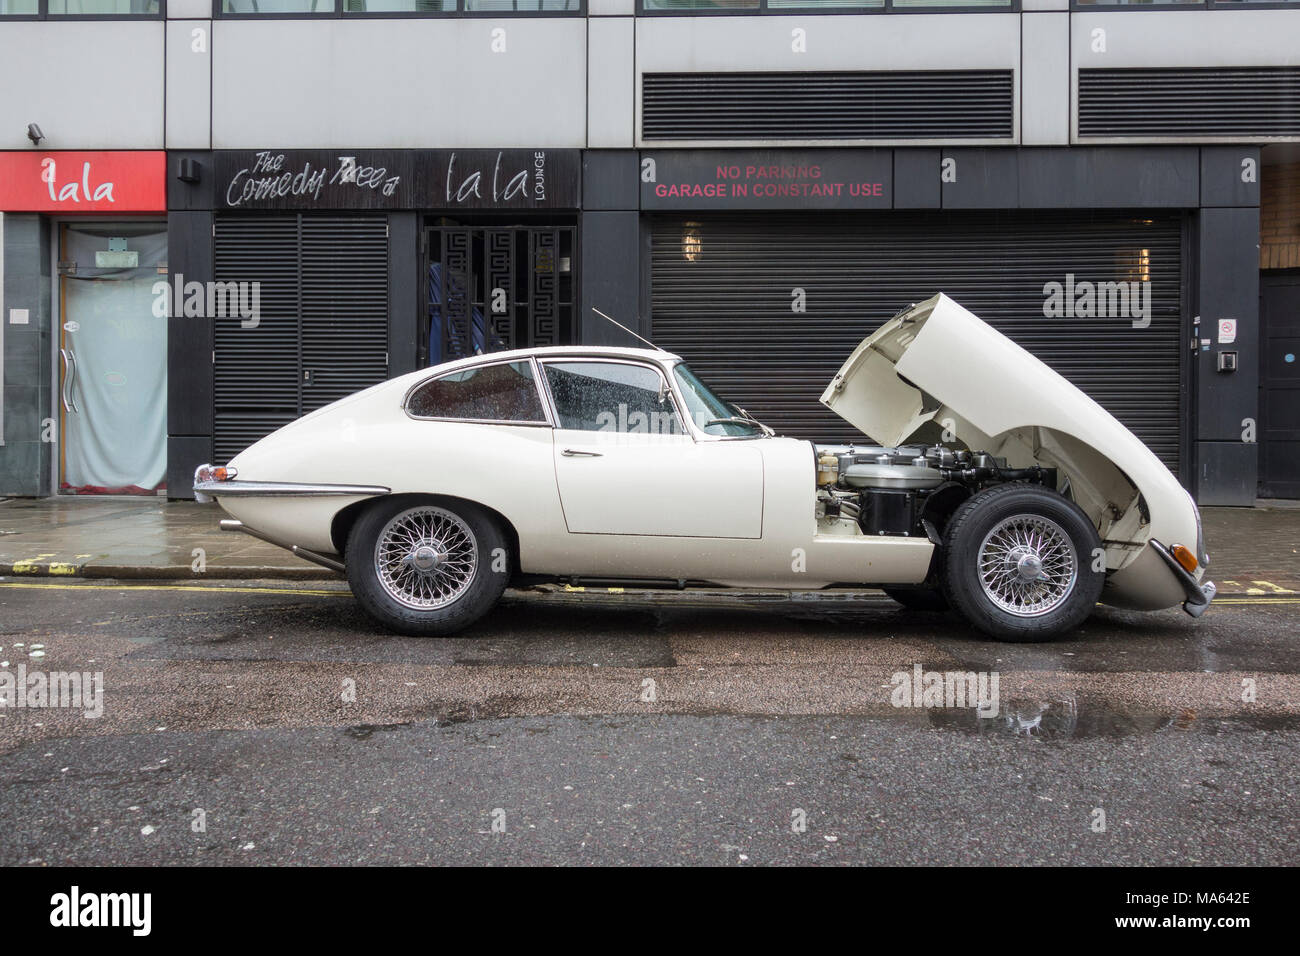 A broken down Jaguar E-type 4.2 litre classic sports car in London, UK Stock Photo